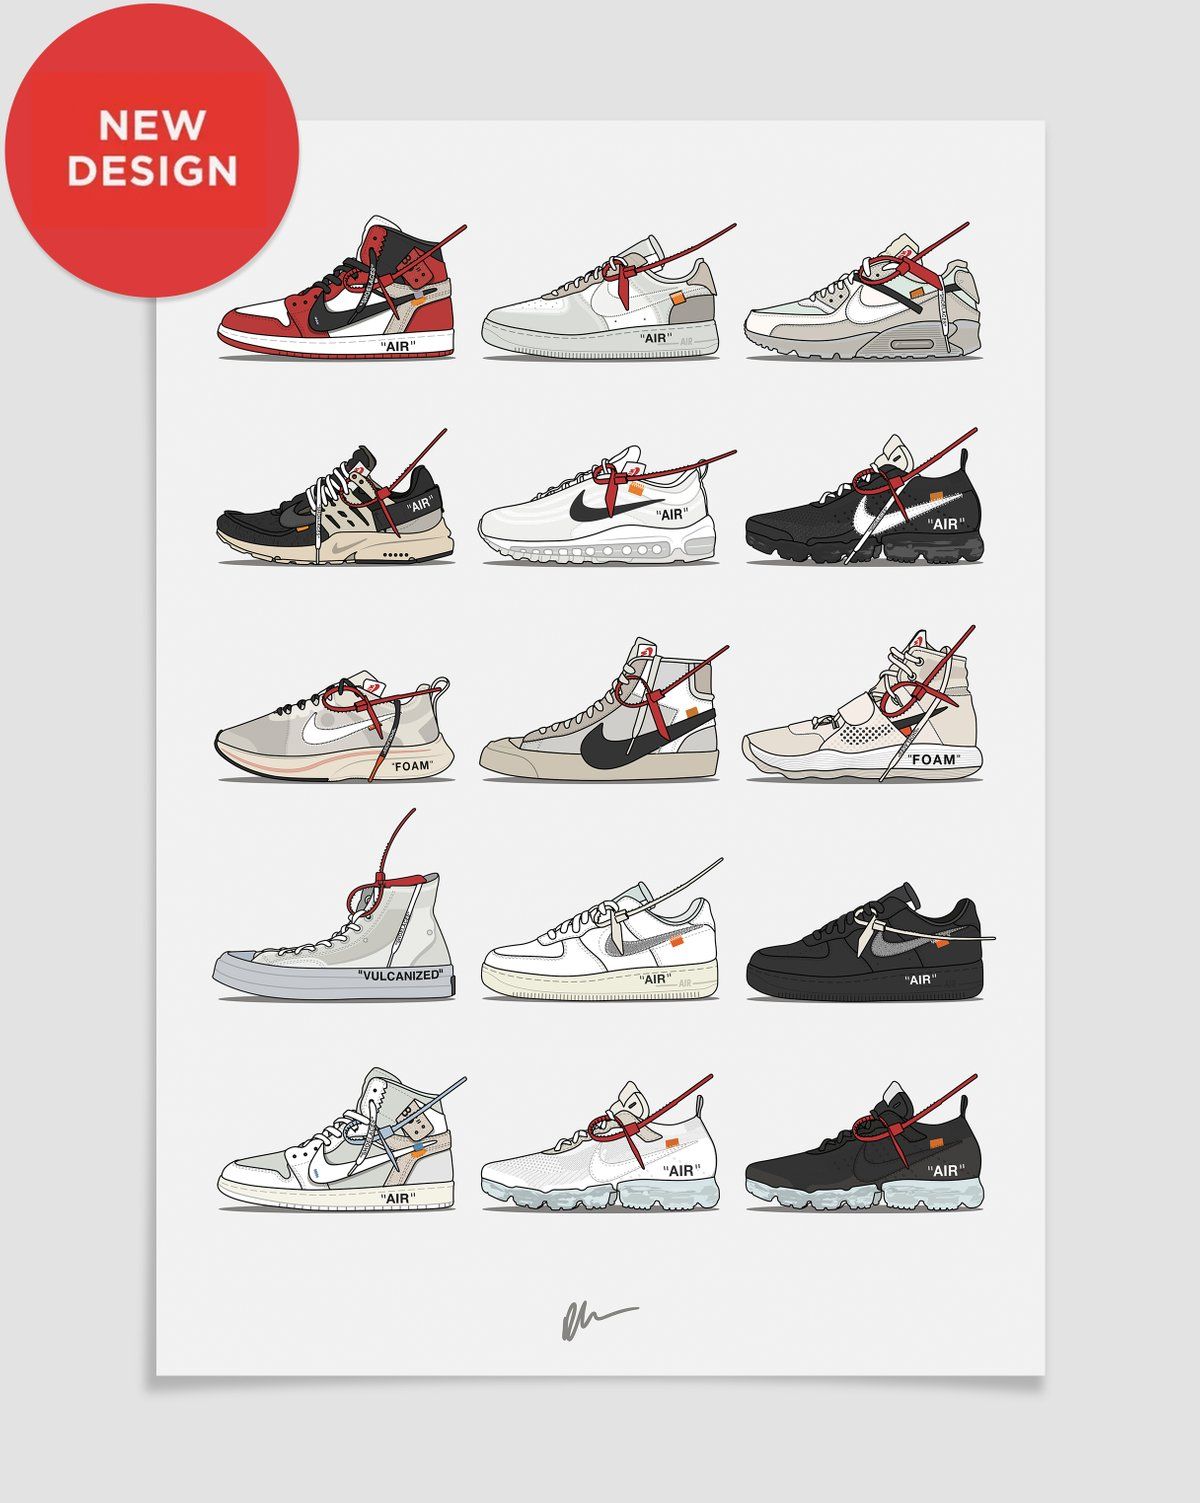 [54+] Wallpapers Sneakers Hypebeast | WallpaperSafari